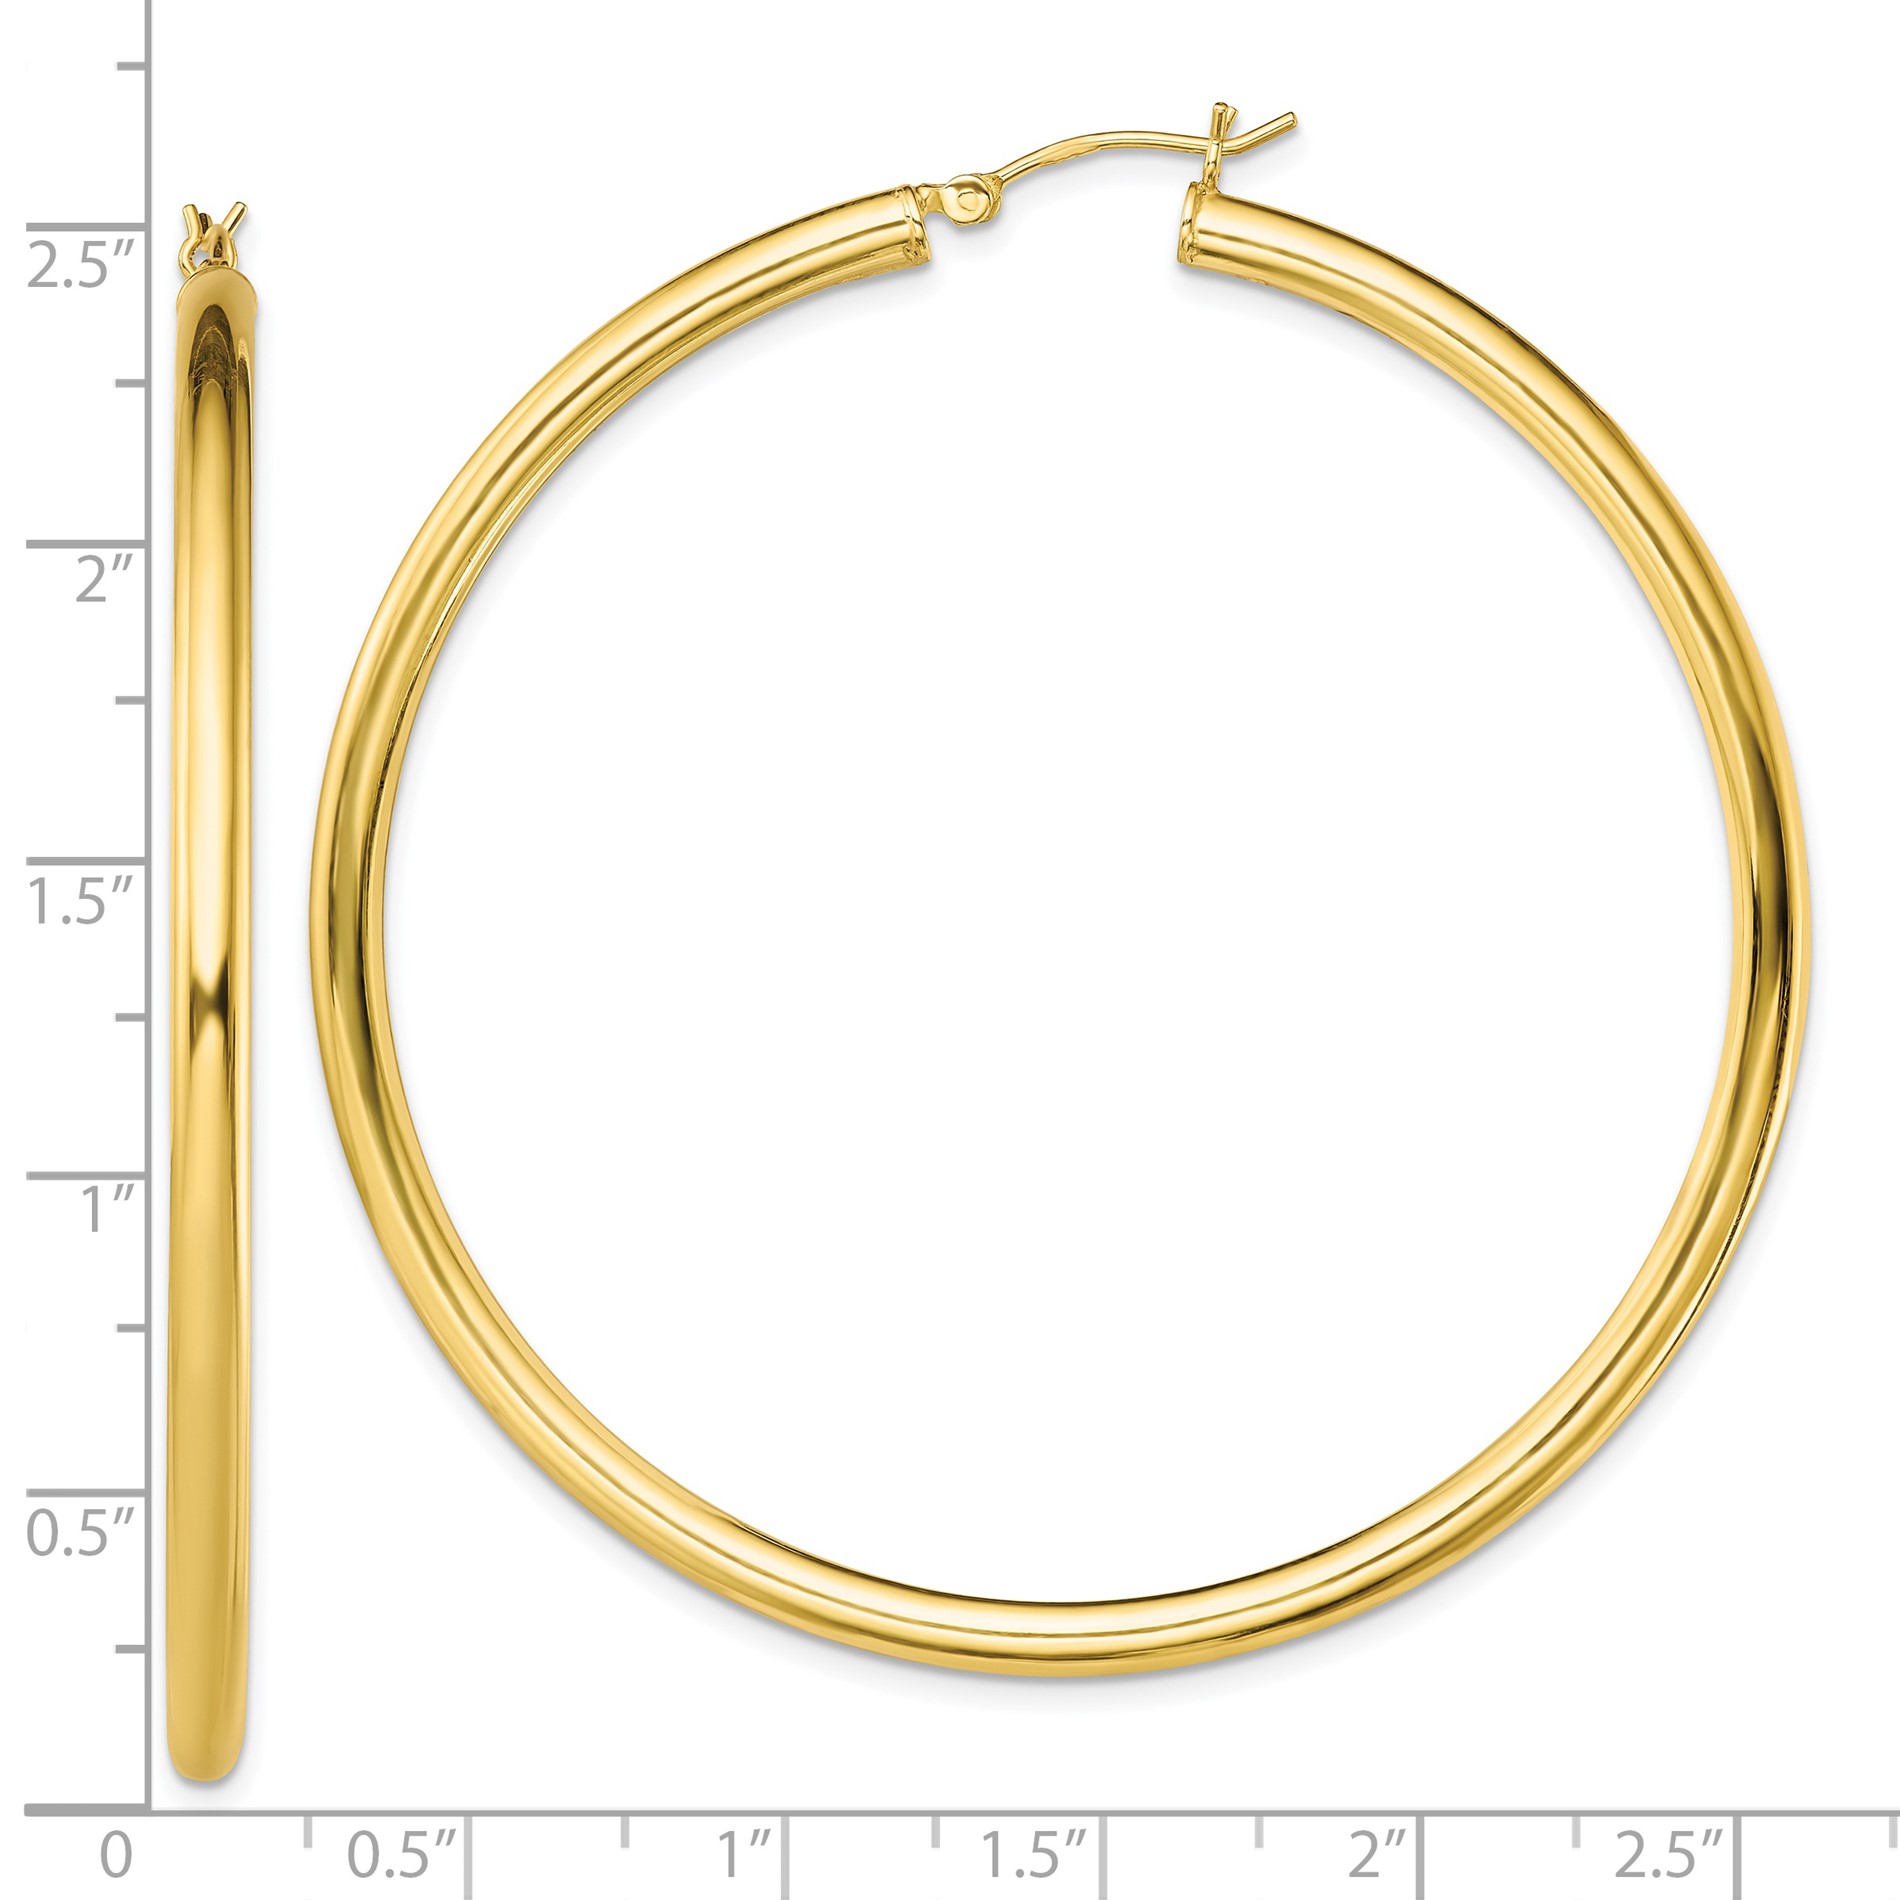 Diamond2Deal 14k Yellow Gold Plated Hoop Earrings (60.8x59.2mm) for Women